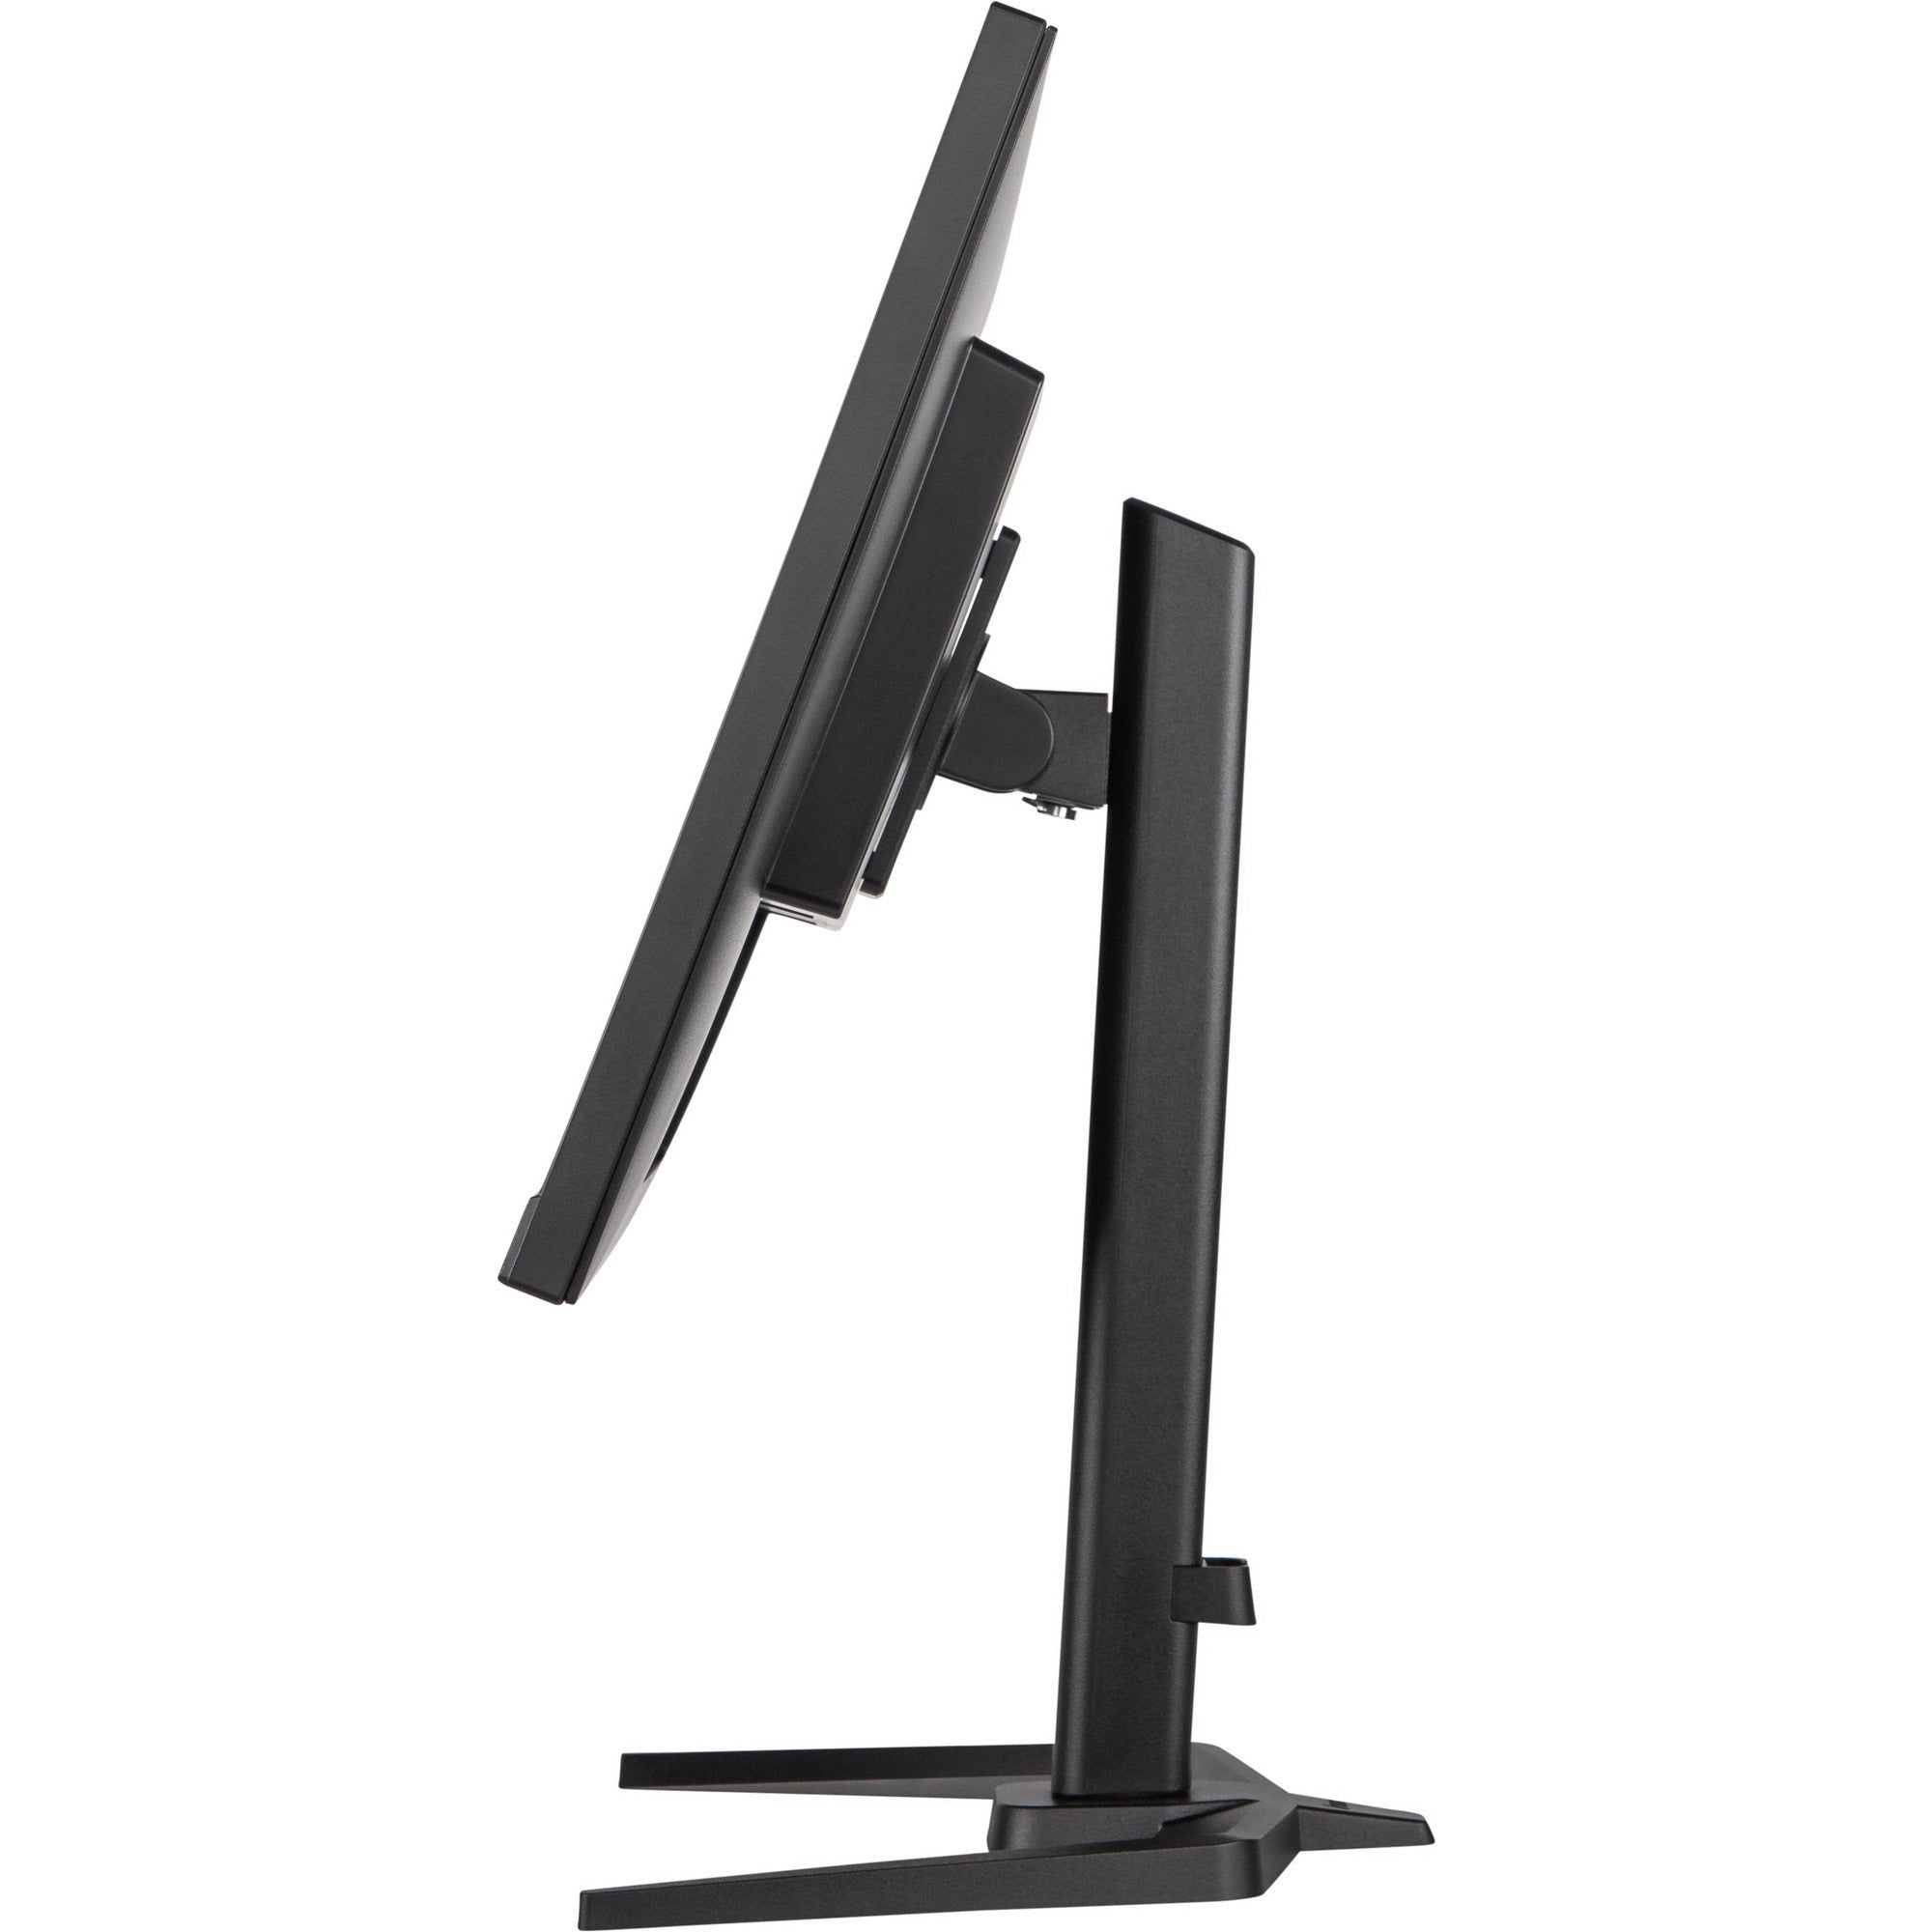 iiyama ProLite GB2730HSU-B5 27" Black Hawk Gaming Monitor with Height Adjust Stand